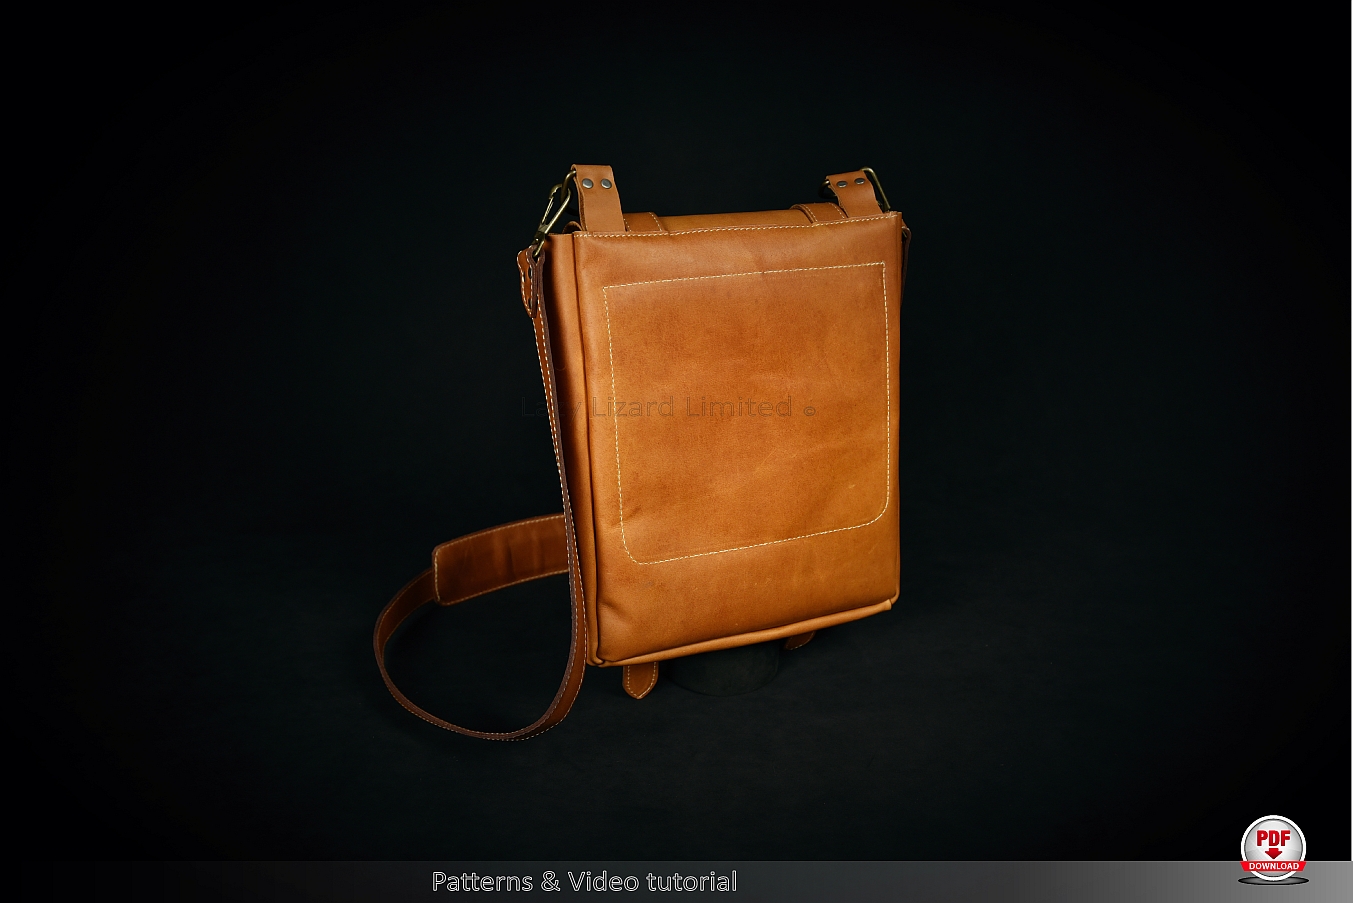 Leather satchel patterns, leather messenger bag patterns | Lazy Lizard